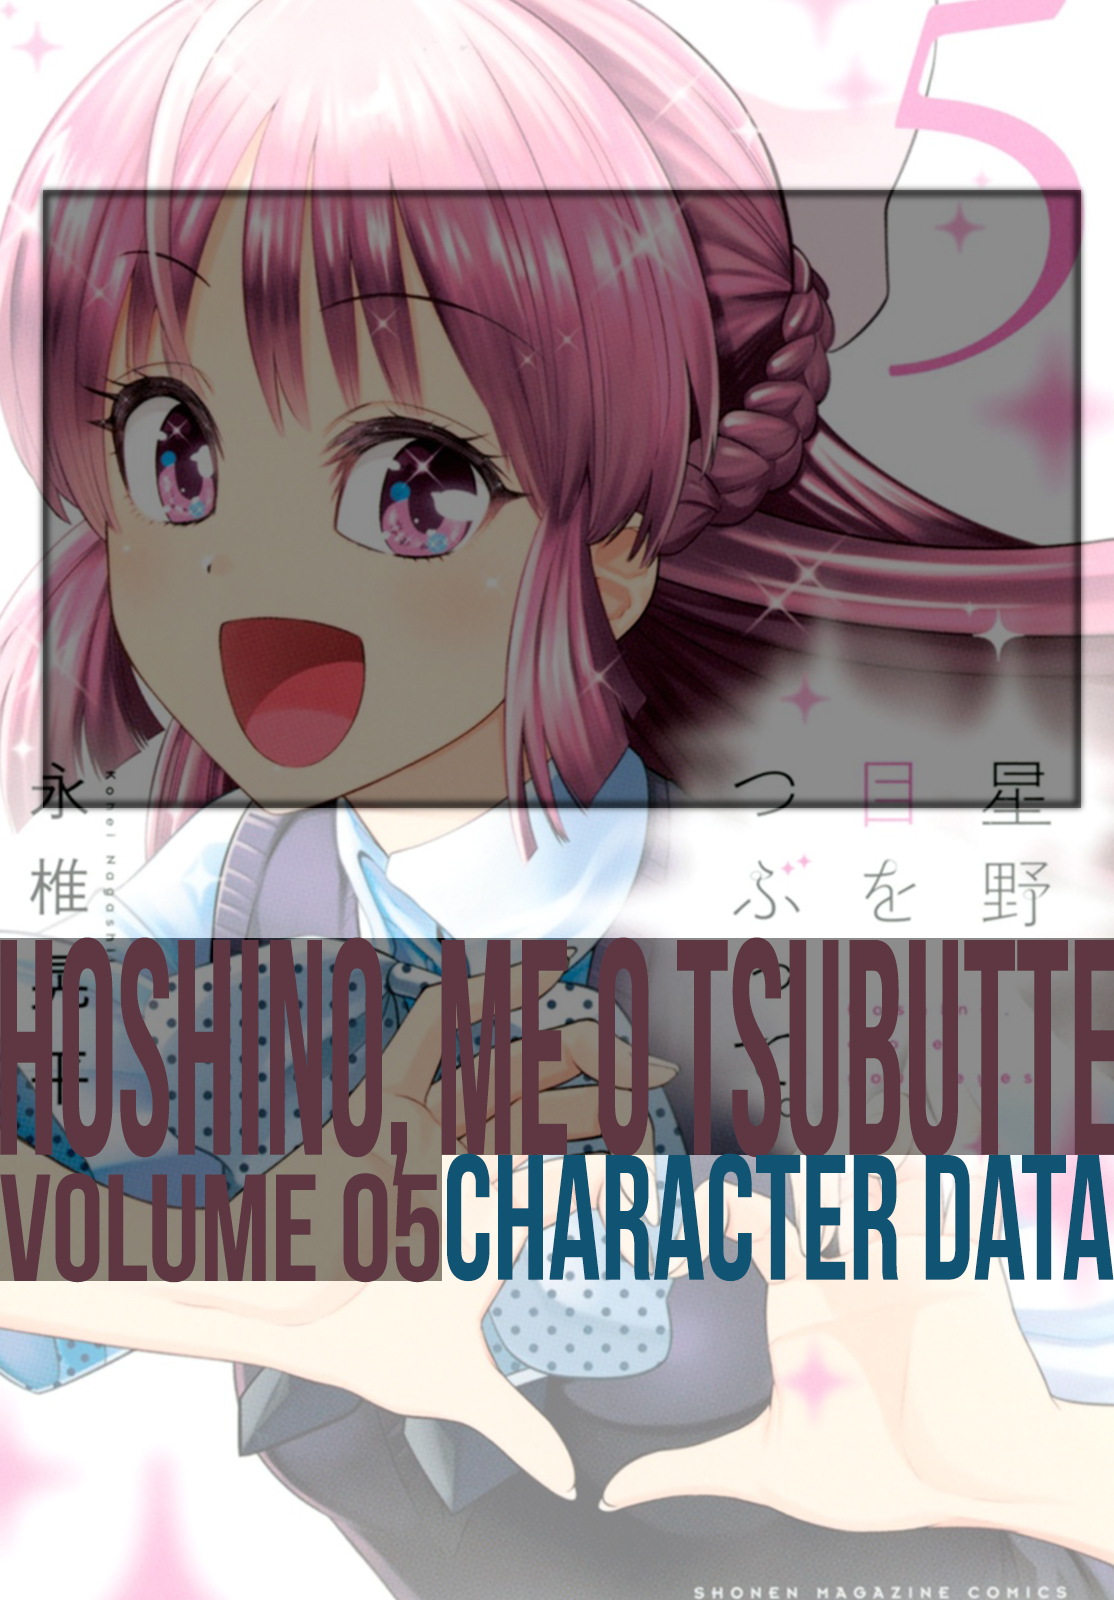 Hoshino, Me O Tsubutte Vol. 5 Ch. 41.5 Volume 5 Extra Character Data